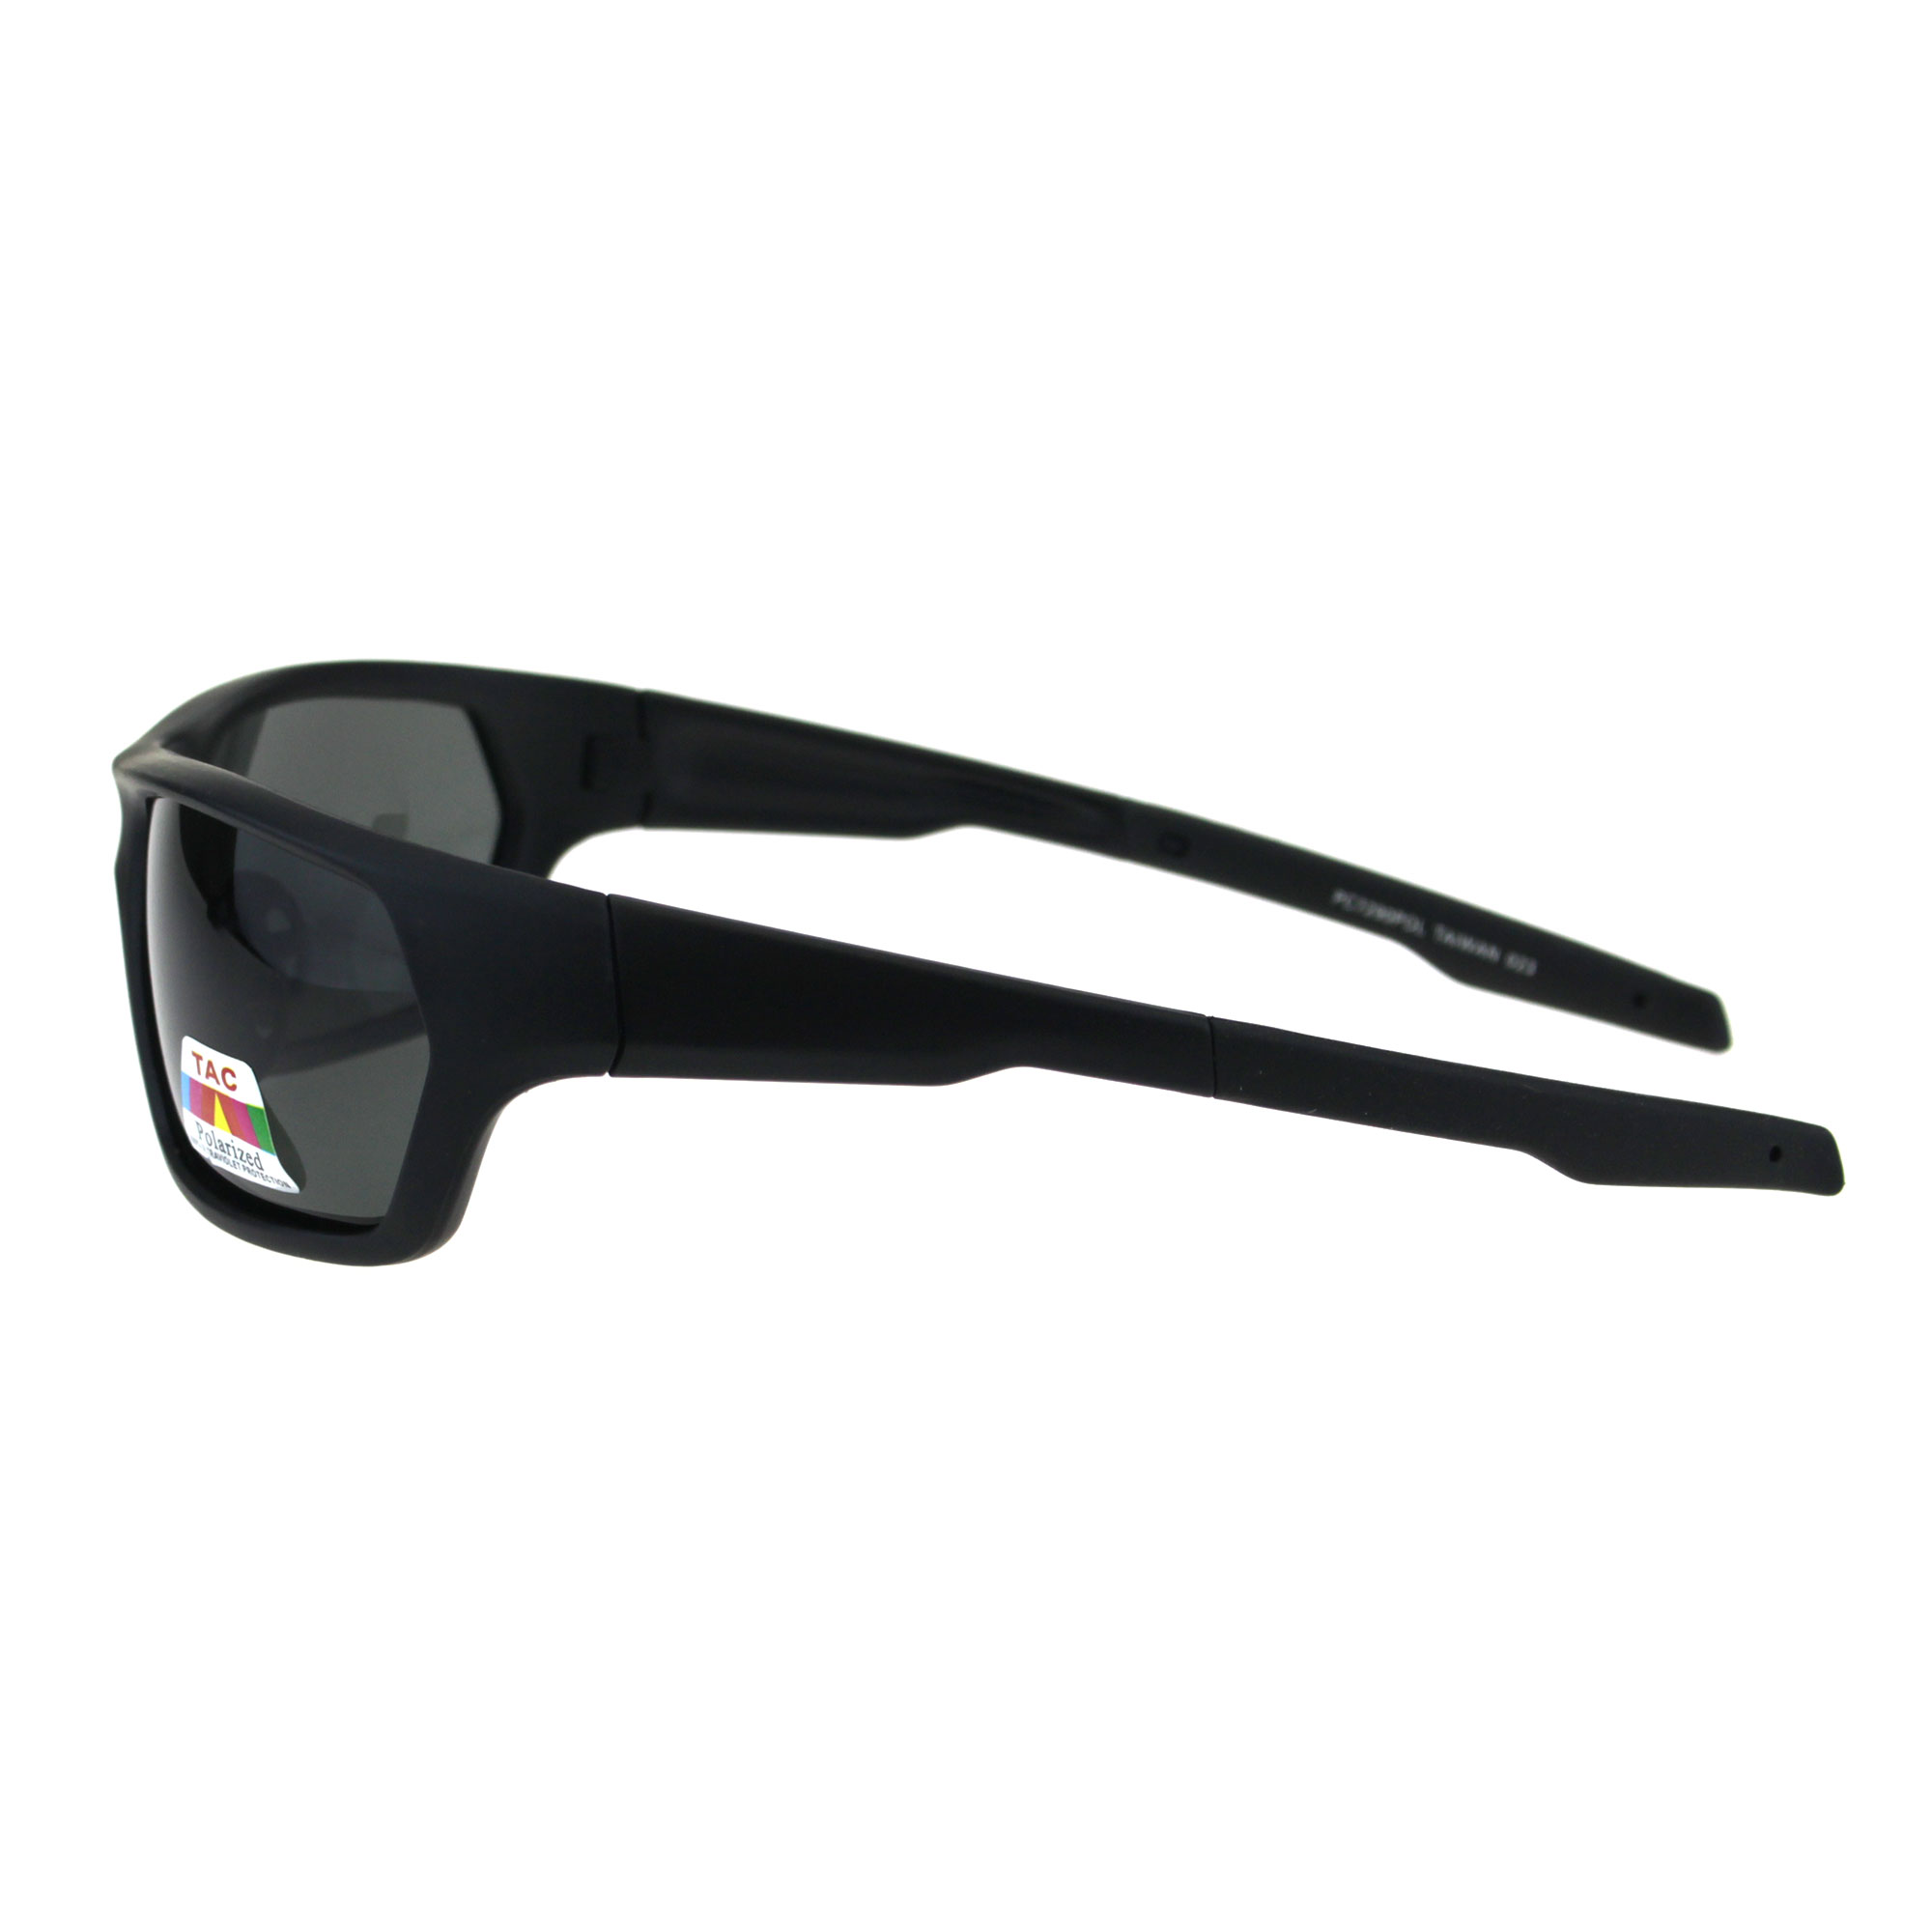 Polarized No Glare Warp Plastic Sport Light Weight Mens Sunglasses Matte Black - image 3 of 3